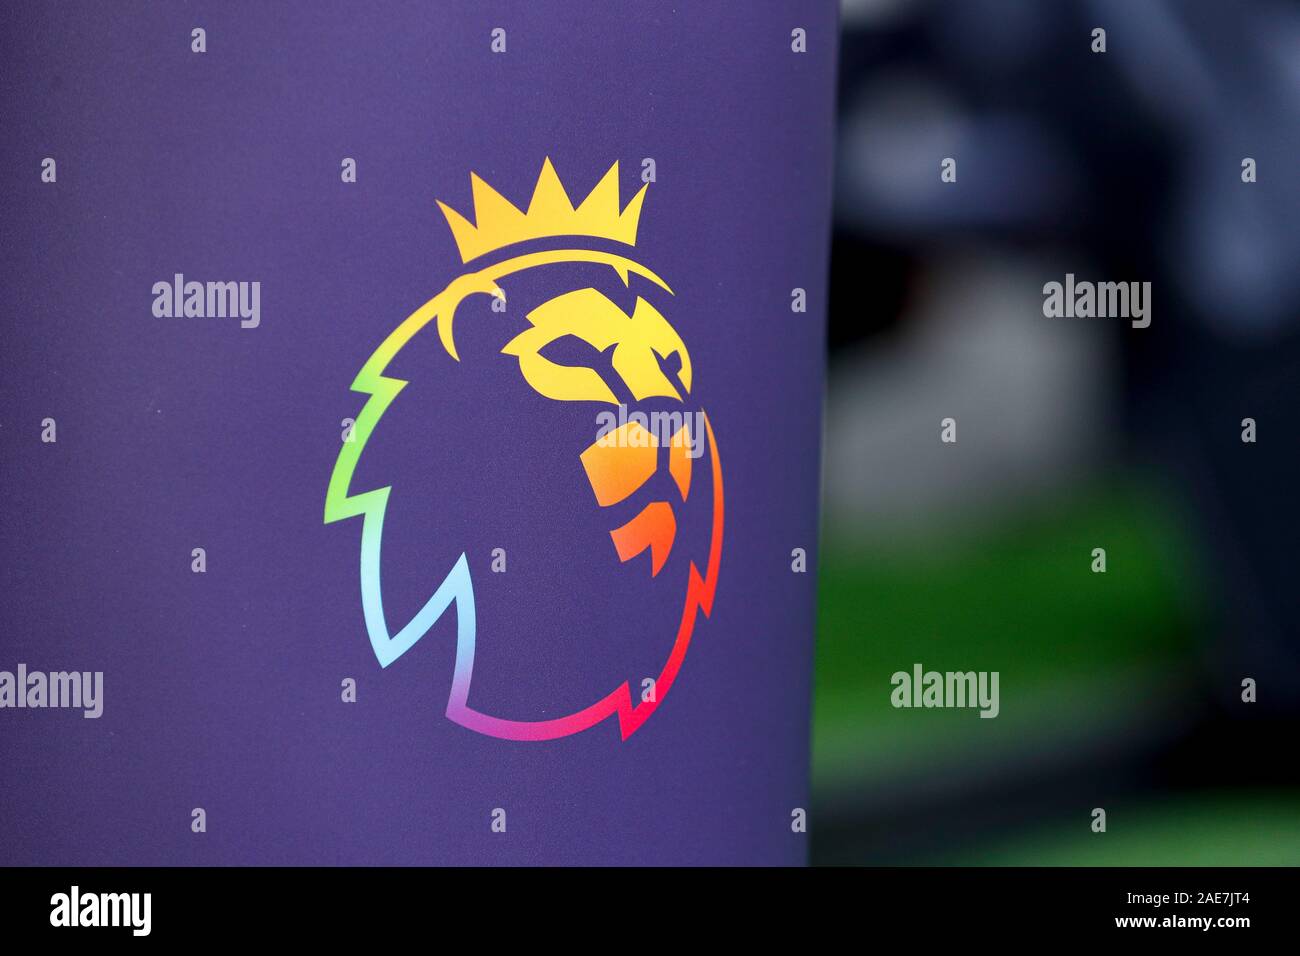 Tottenham Stadium, Reino Unido. 7 dic, 2019. Liga de fútbol, Tottenham Hotspur vs Burnley; el logotipo oficial de la Premier League de LGBT en la pantalla dentro de